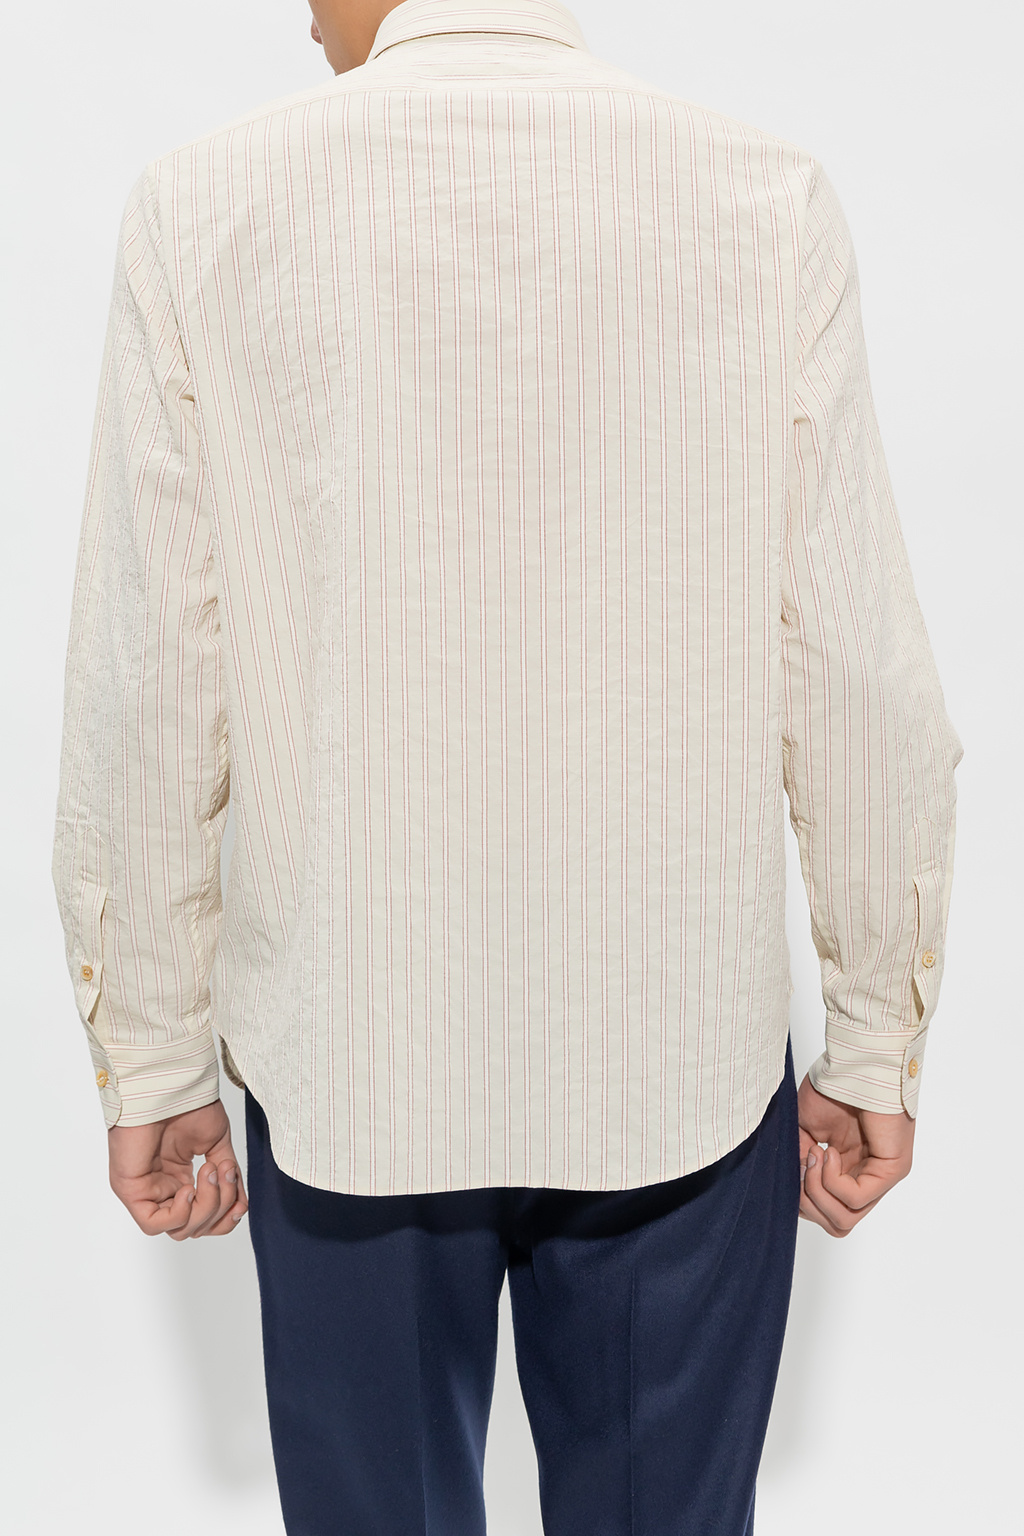 gucci expensive Striped cotton shirt